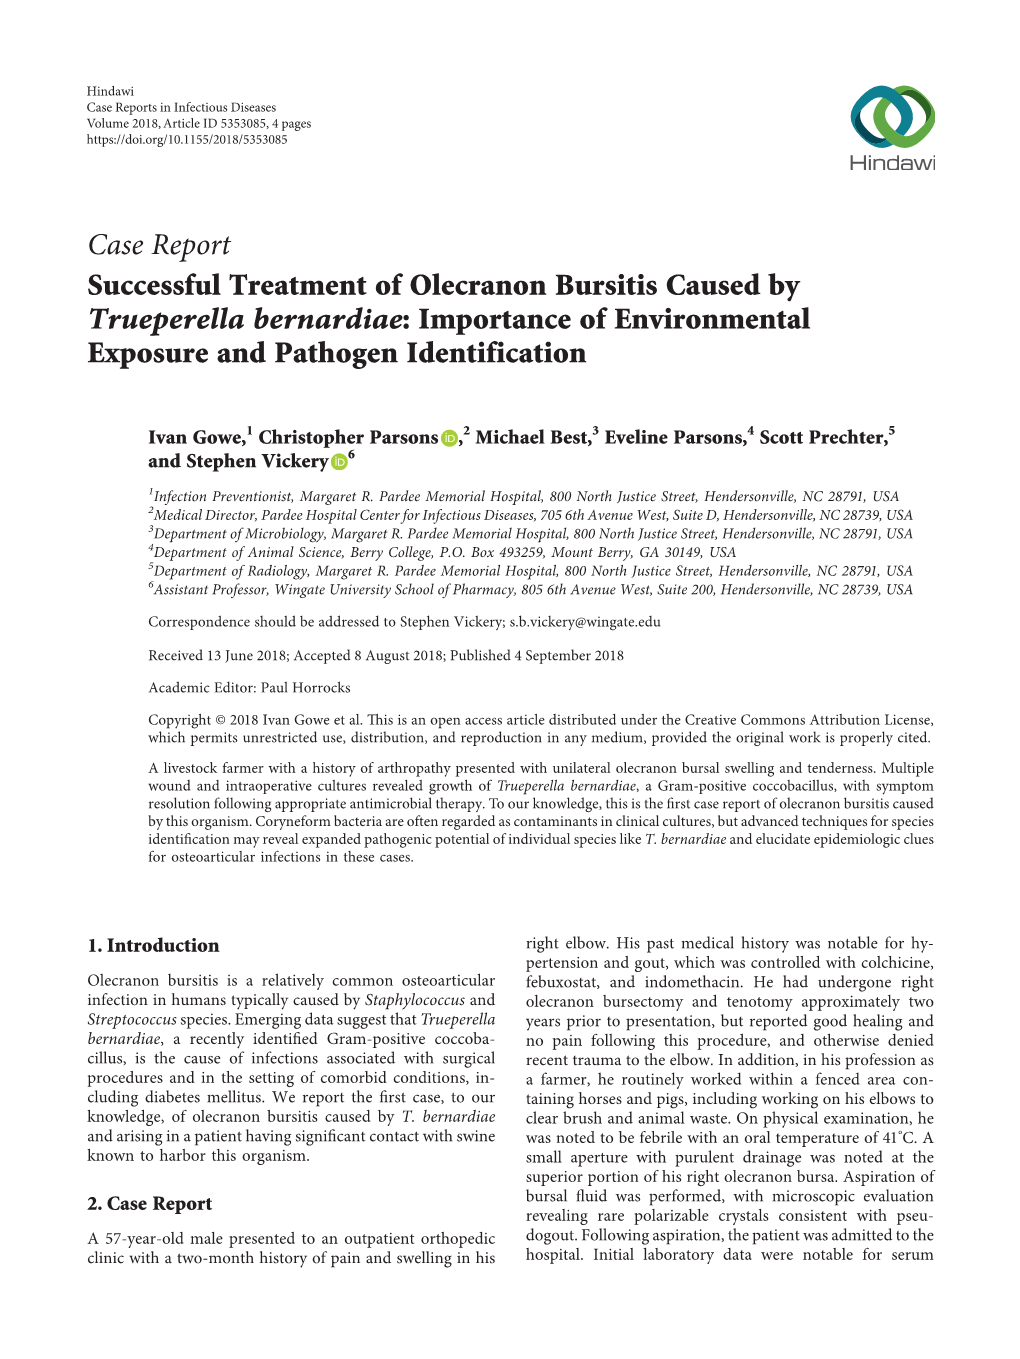 Successful Treatment of Olecranon Bursitis Caused by Trueperella Bernardiae: Importance of Environmental Exposure and Pathogen Identification